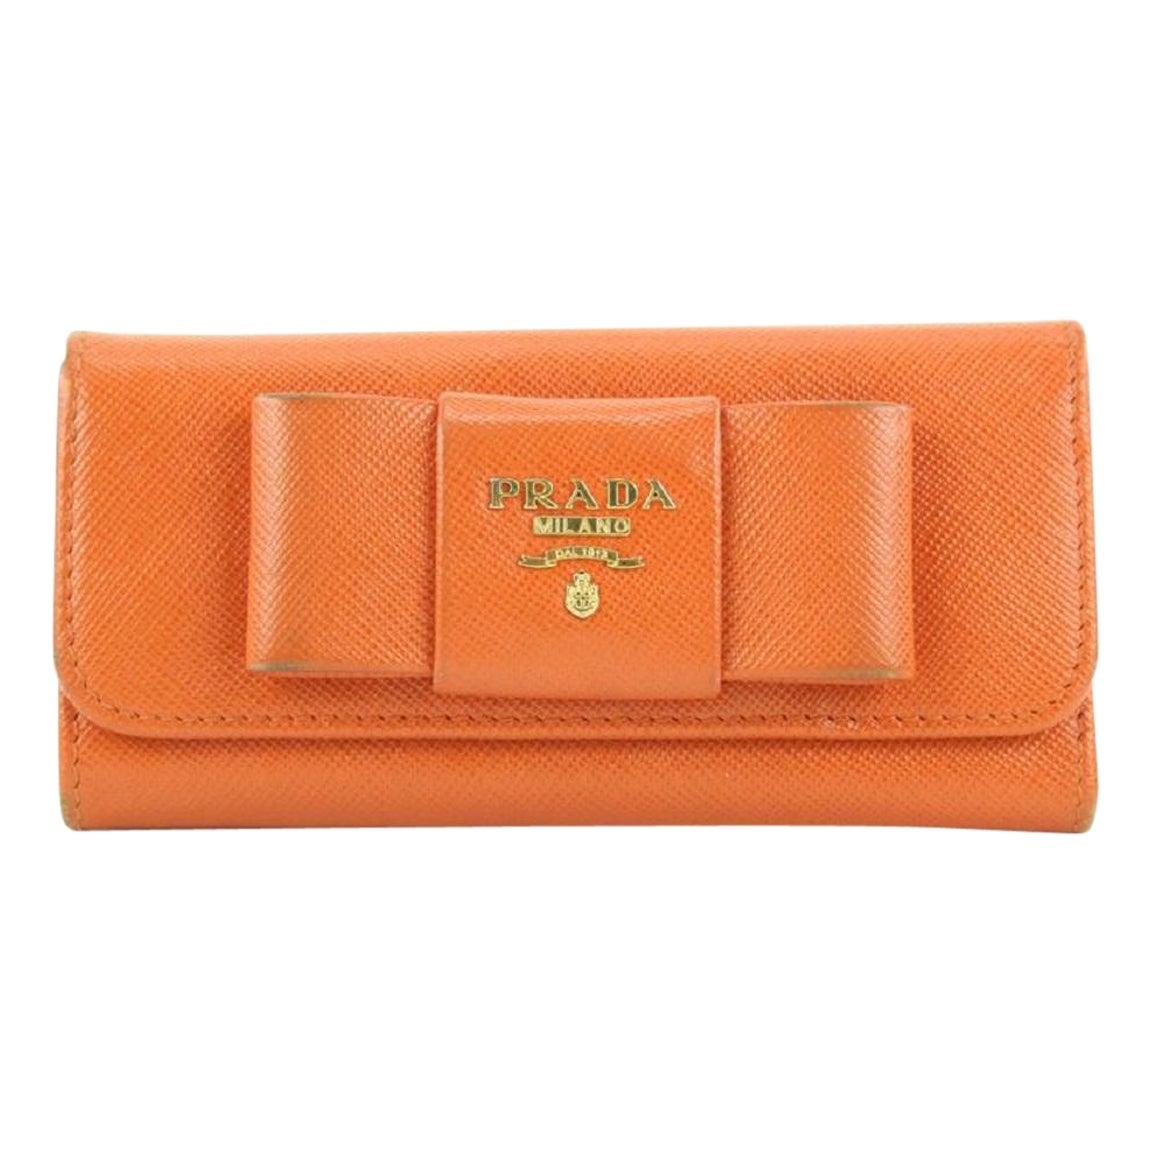 Prada Orange Saffiano Leather Bow 6 Key Holder Wallet Case 354pr525